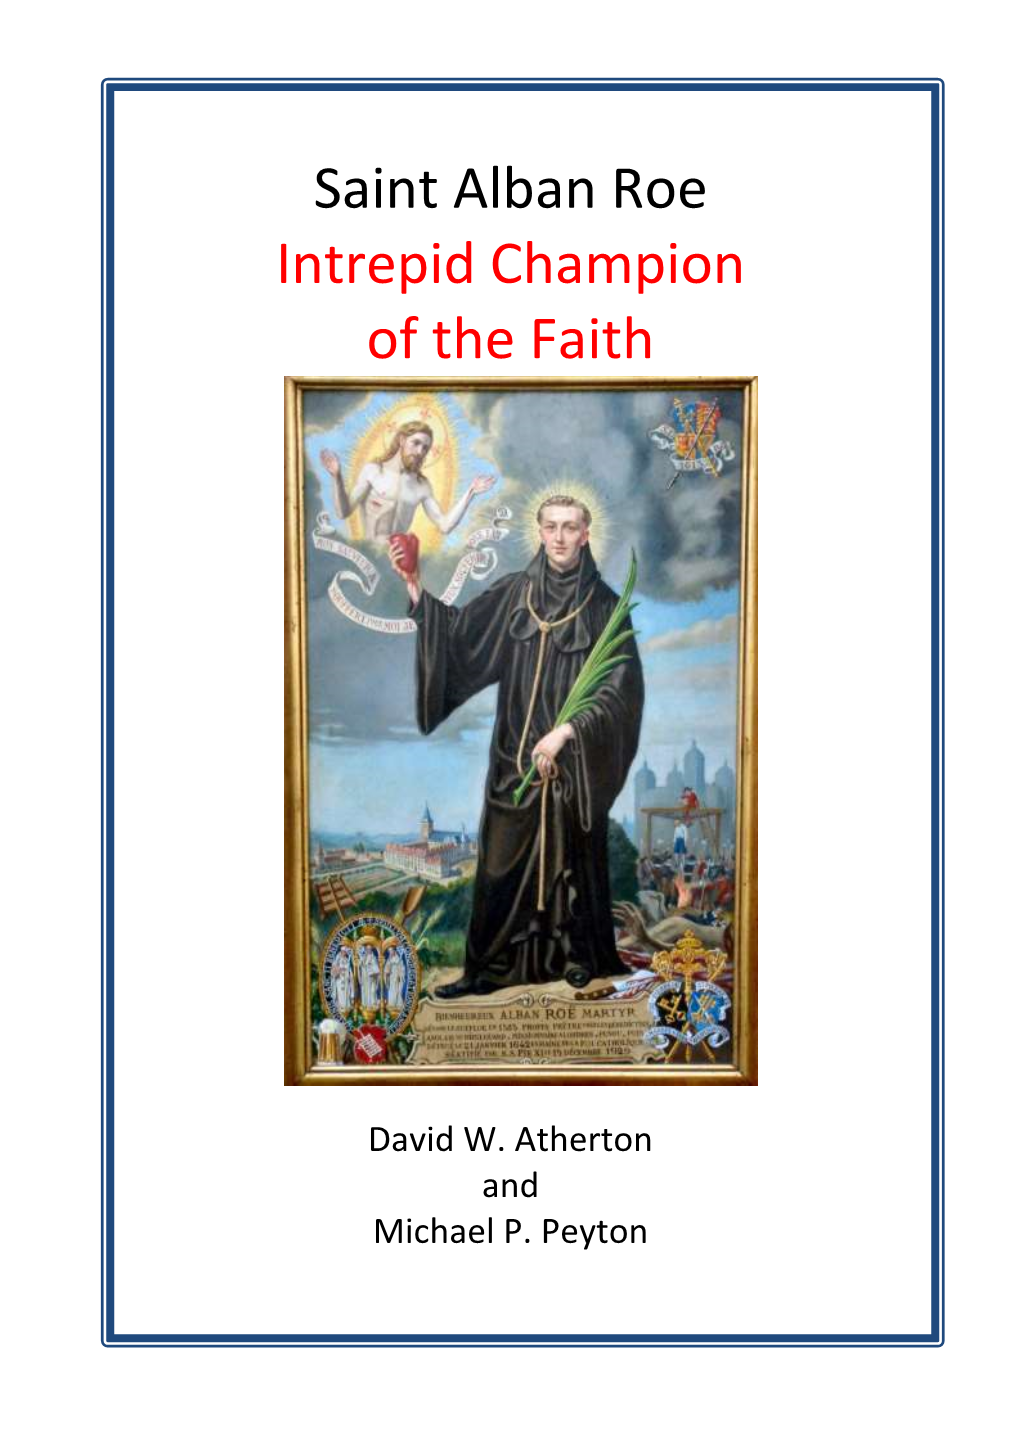 Saint Alban Roe Intrepid Champion of the Faith